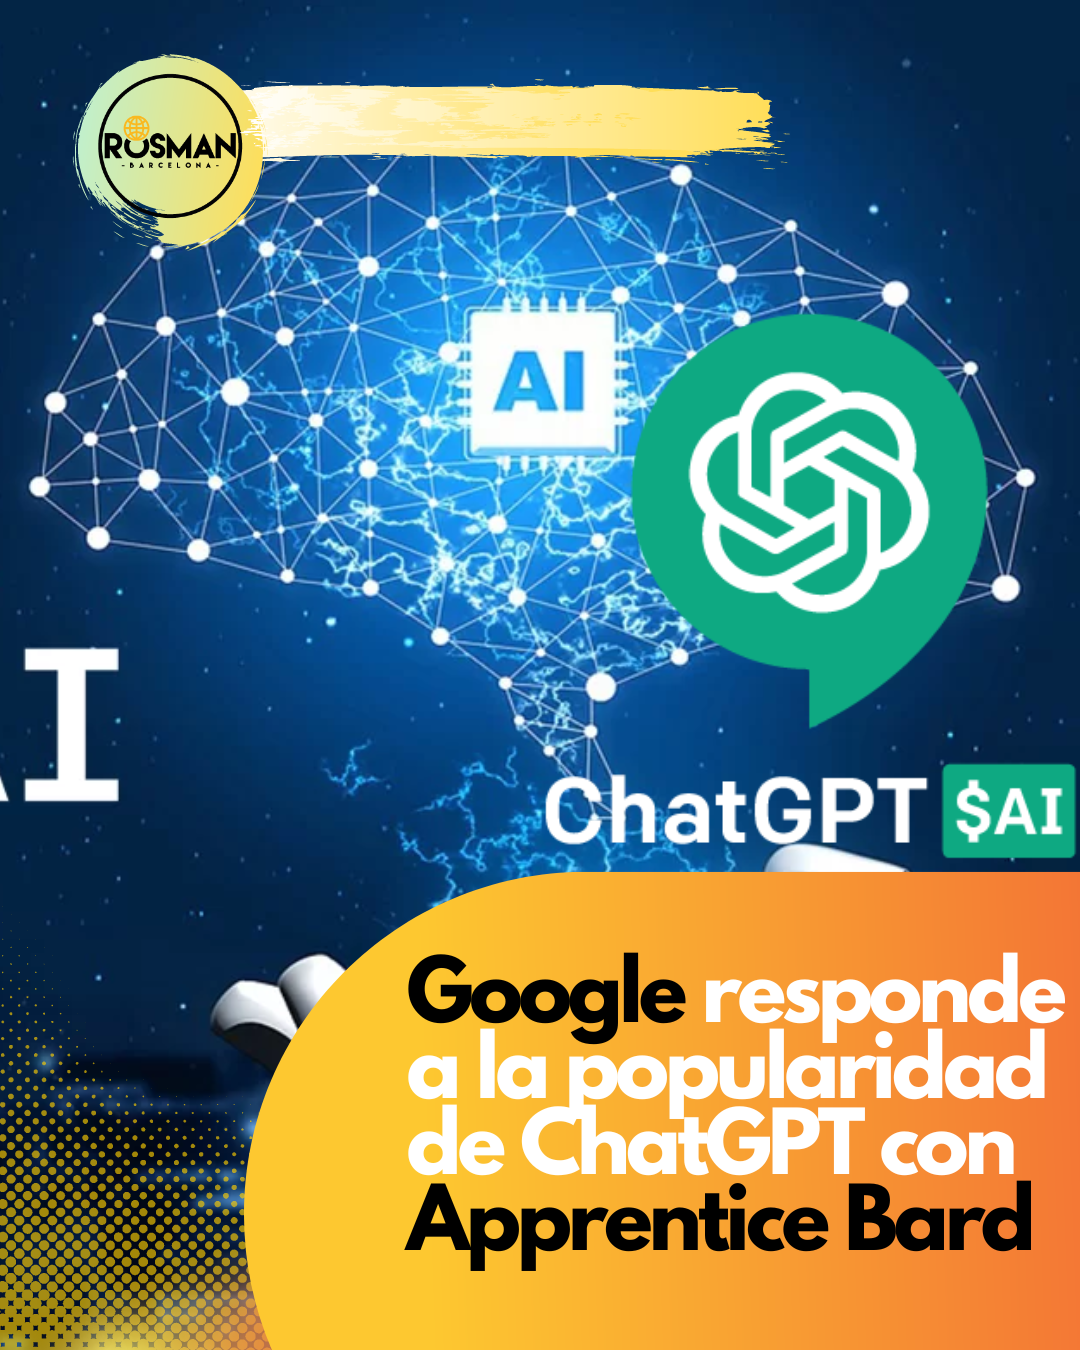 Google responde a la popularidad de ChatGPT con Apprentice Bard | Rosman Barcelona